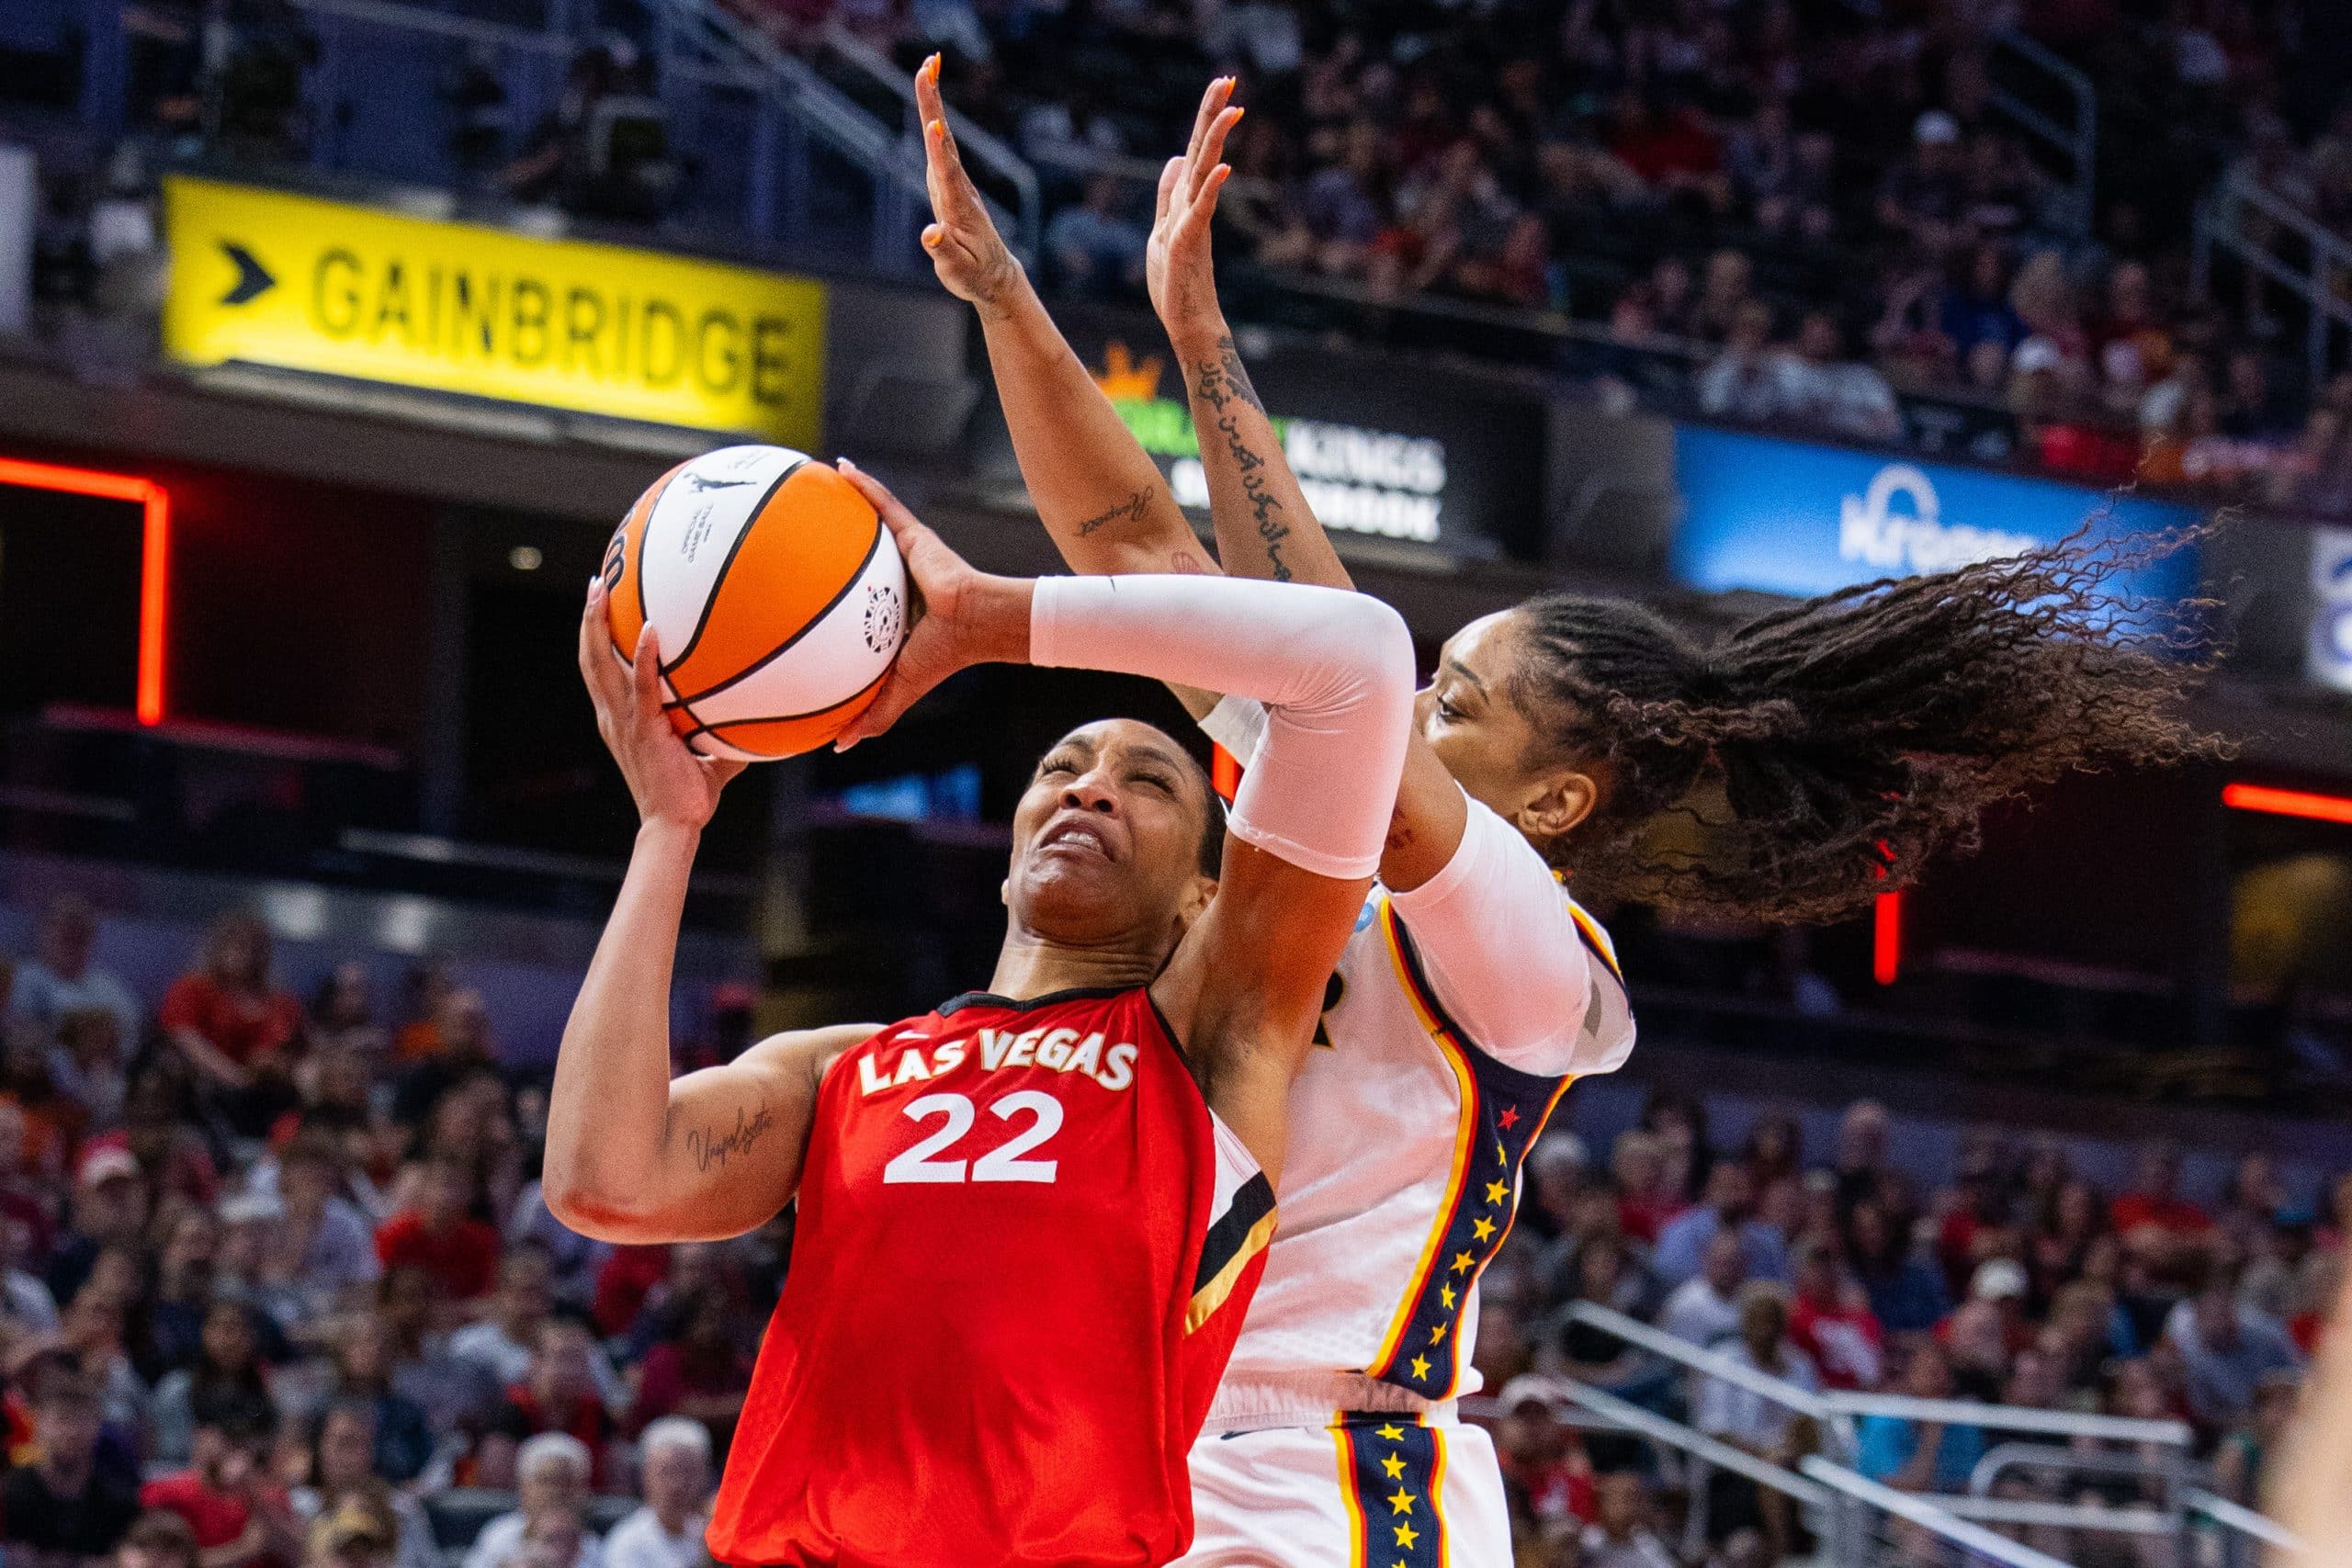 WNBA ratings are up halfway through the season.